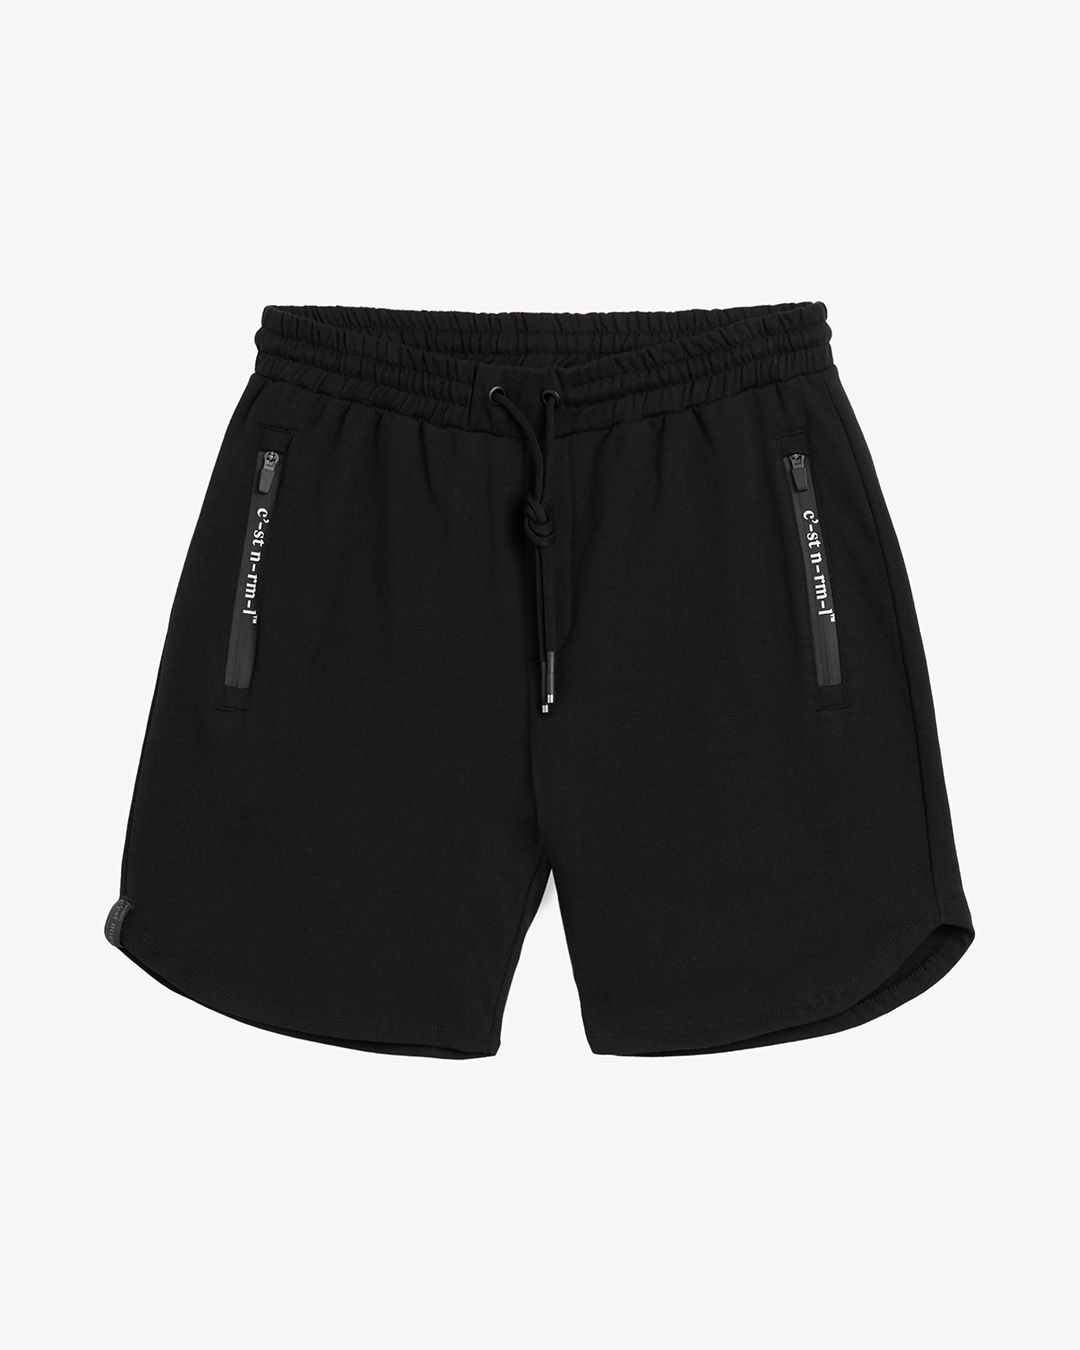 The Original Sweat Shorts | c'est normal - Around here.